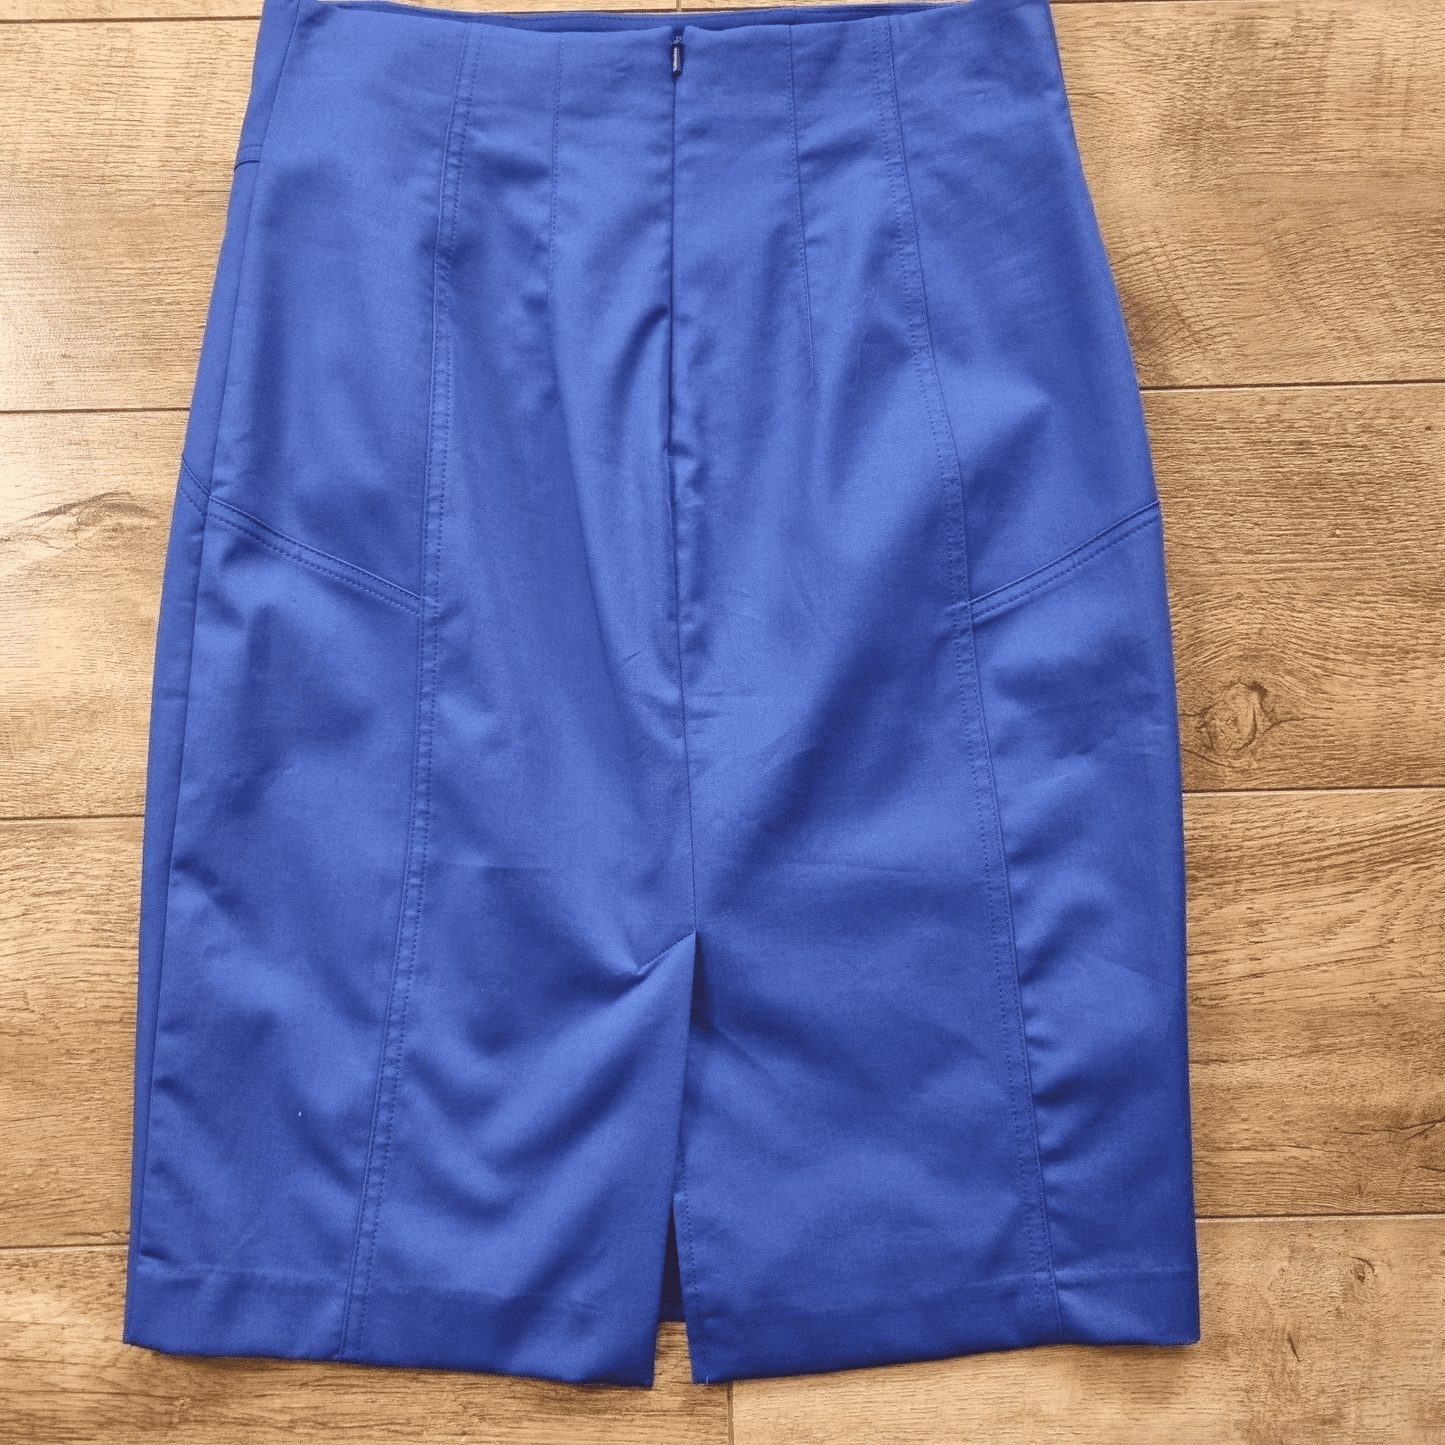 Pencil Skirt Size 12 Marks and Spencer Plain Blue Length 24"